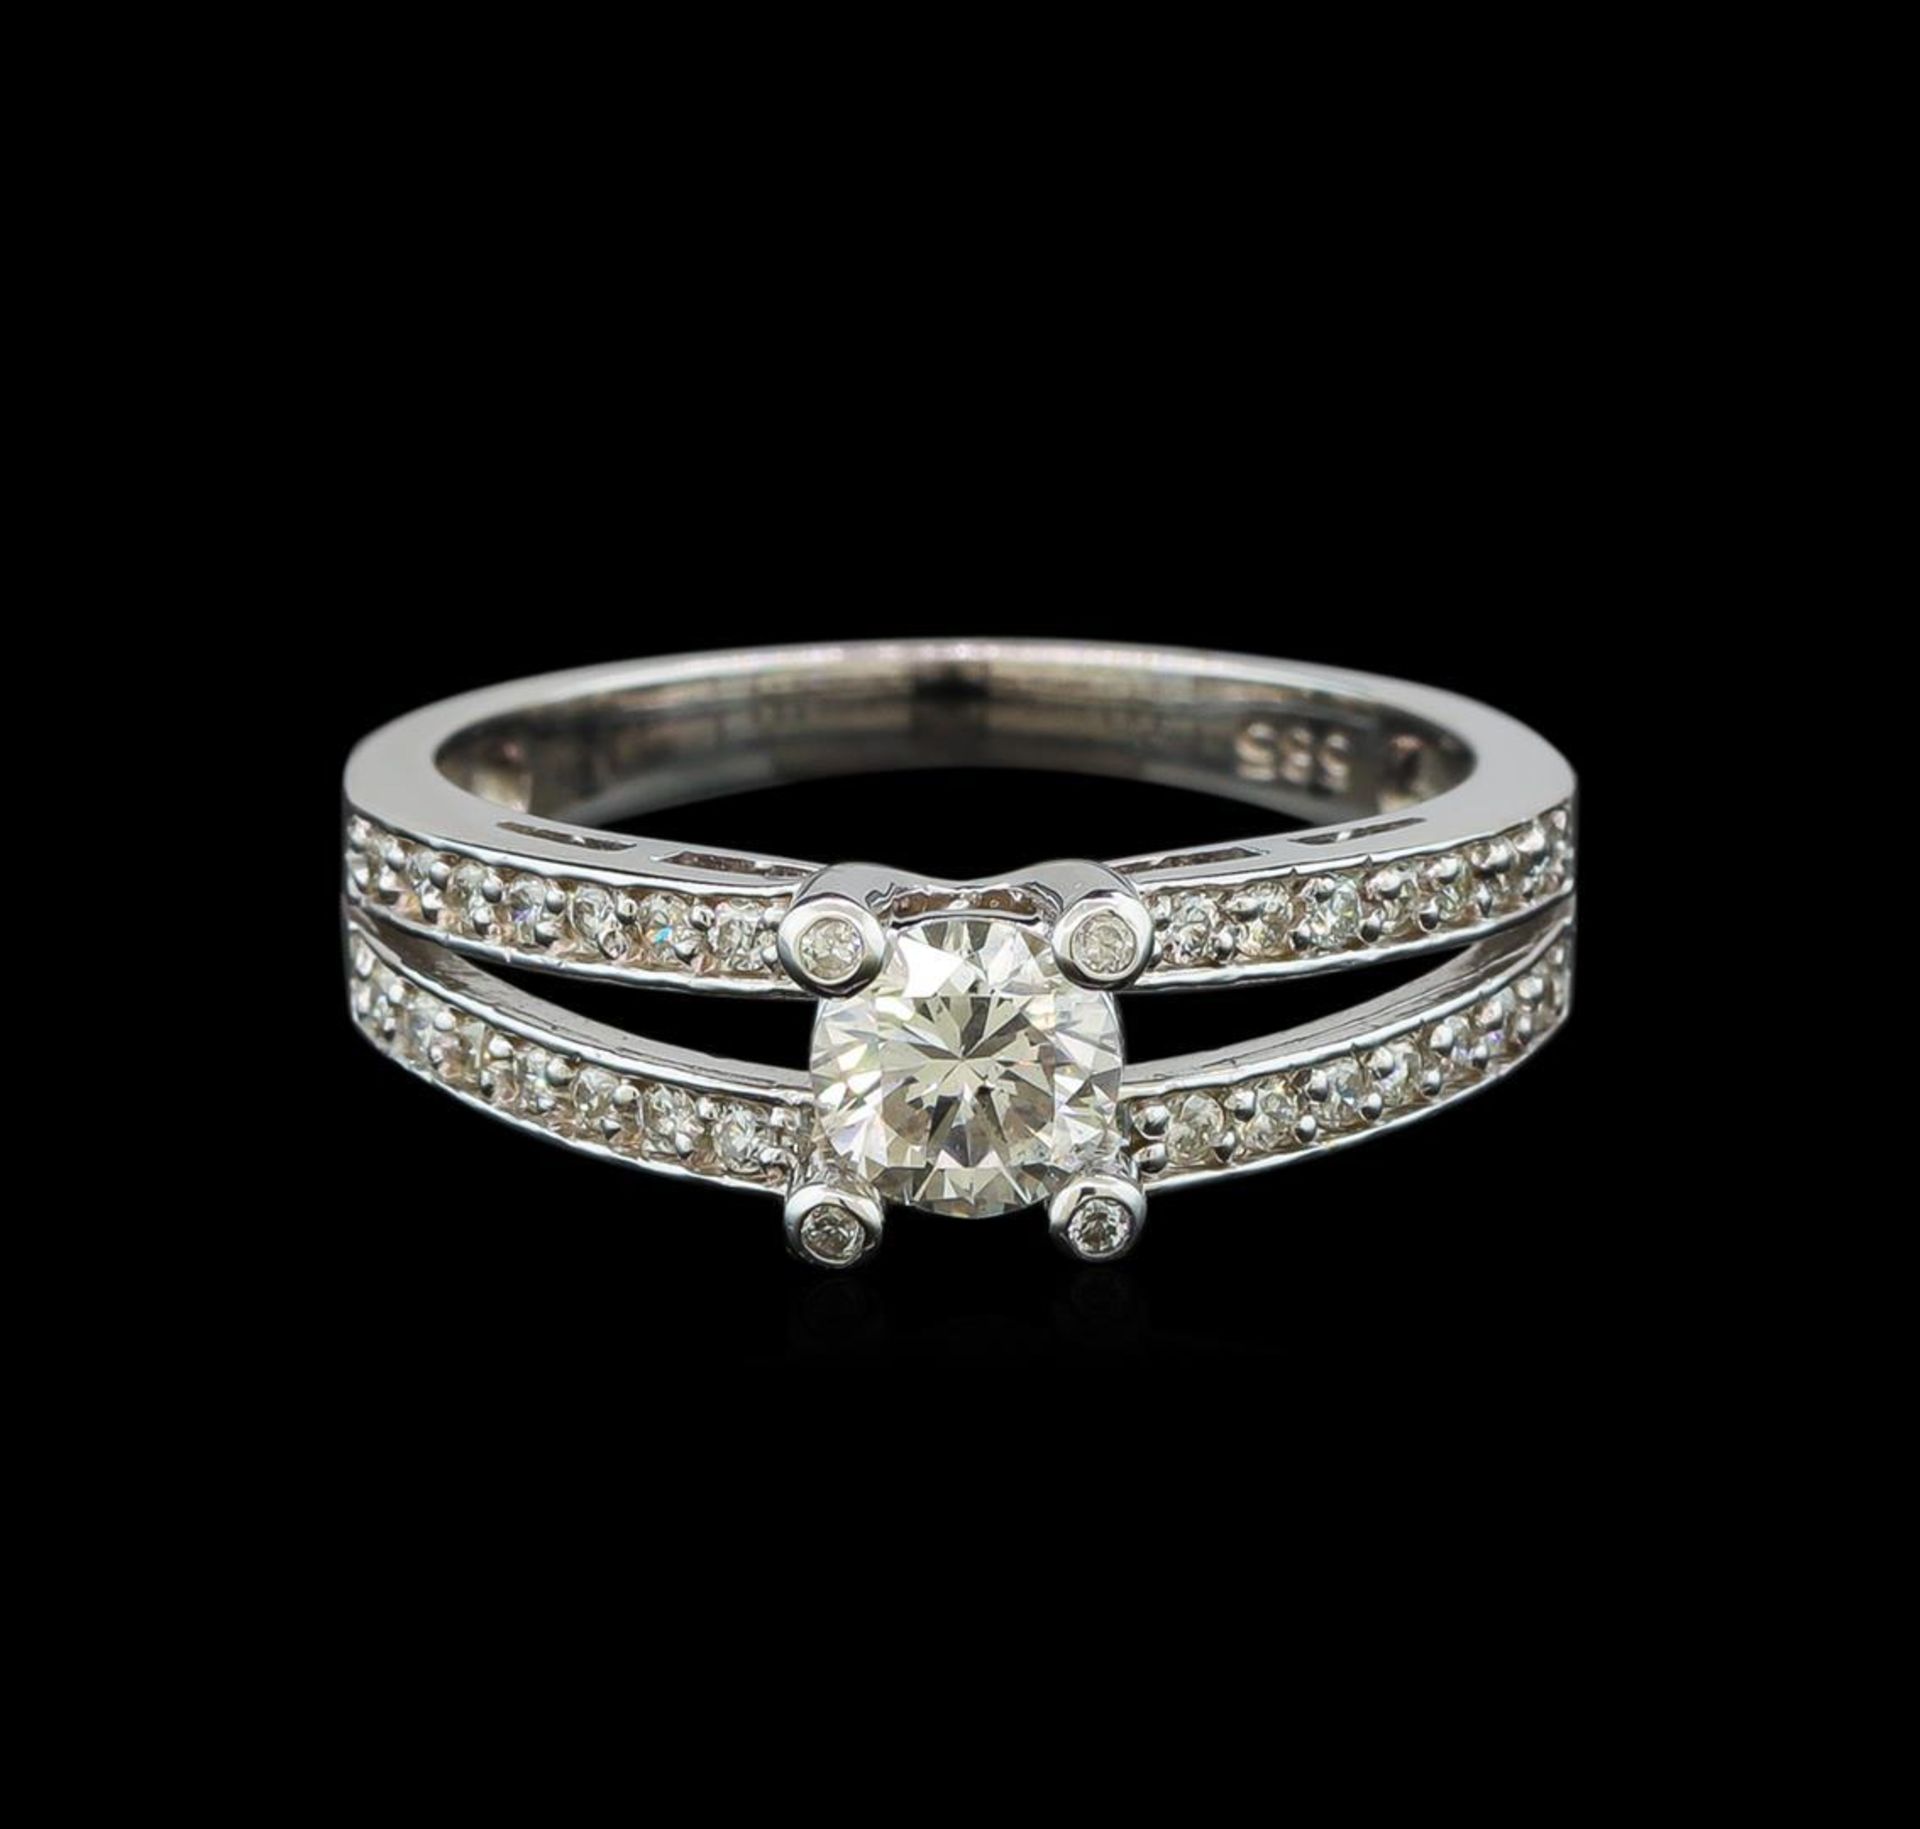 0.77 ctw Diamond Ring - 14KT White Gold - Image 2 of 4